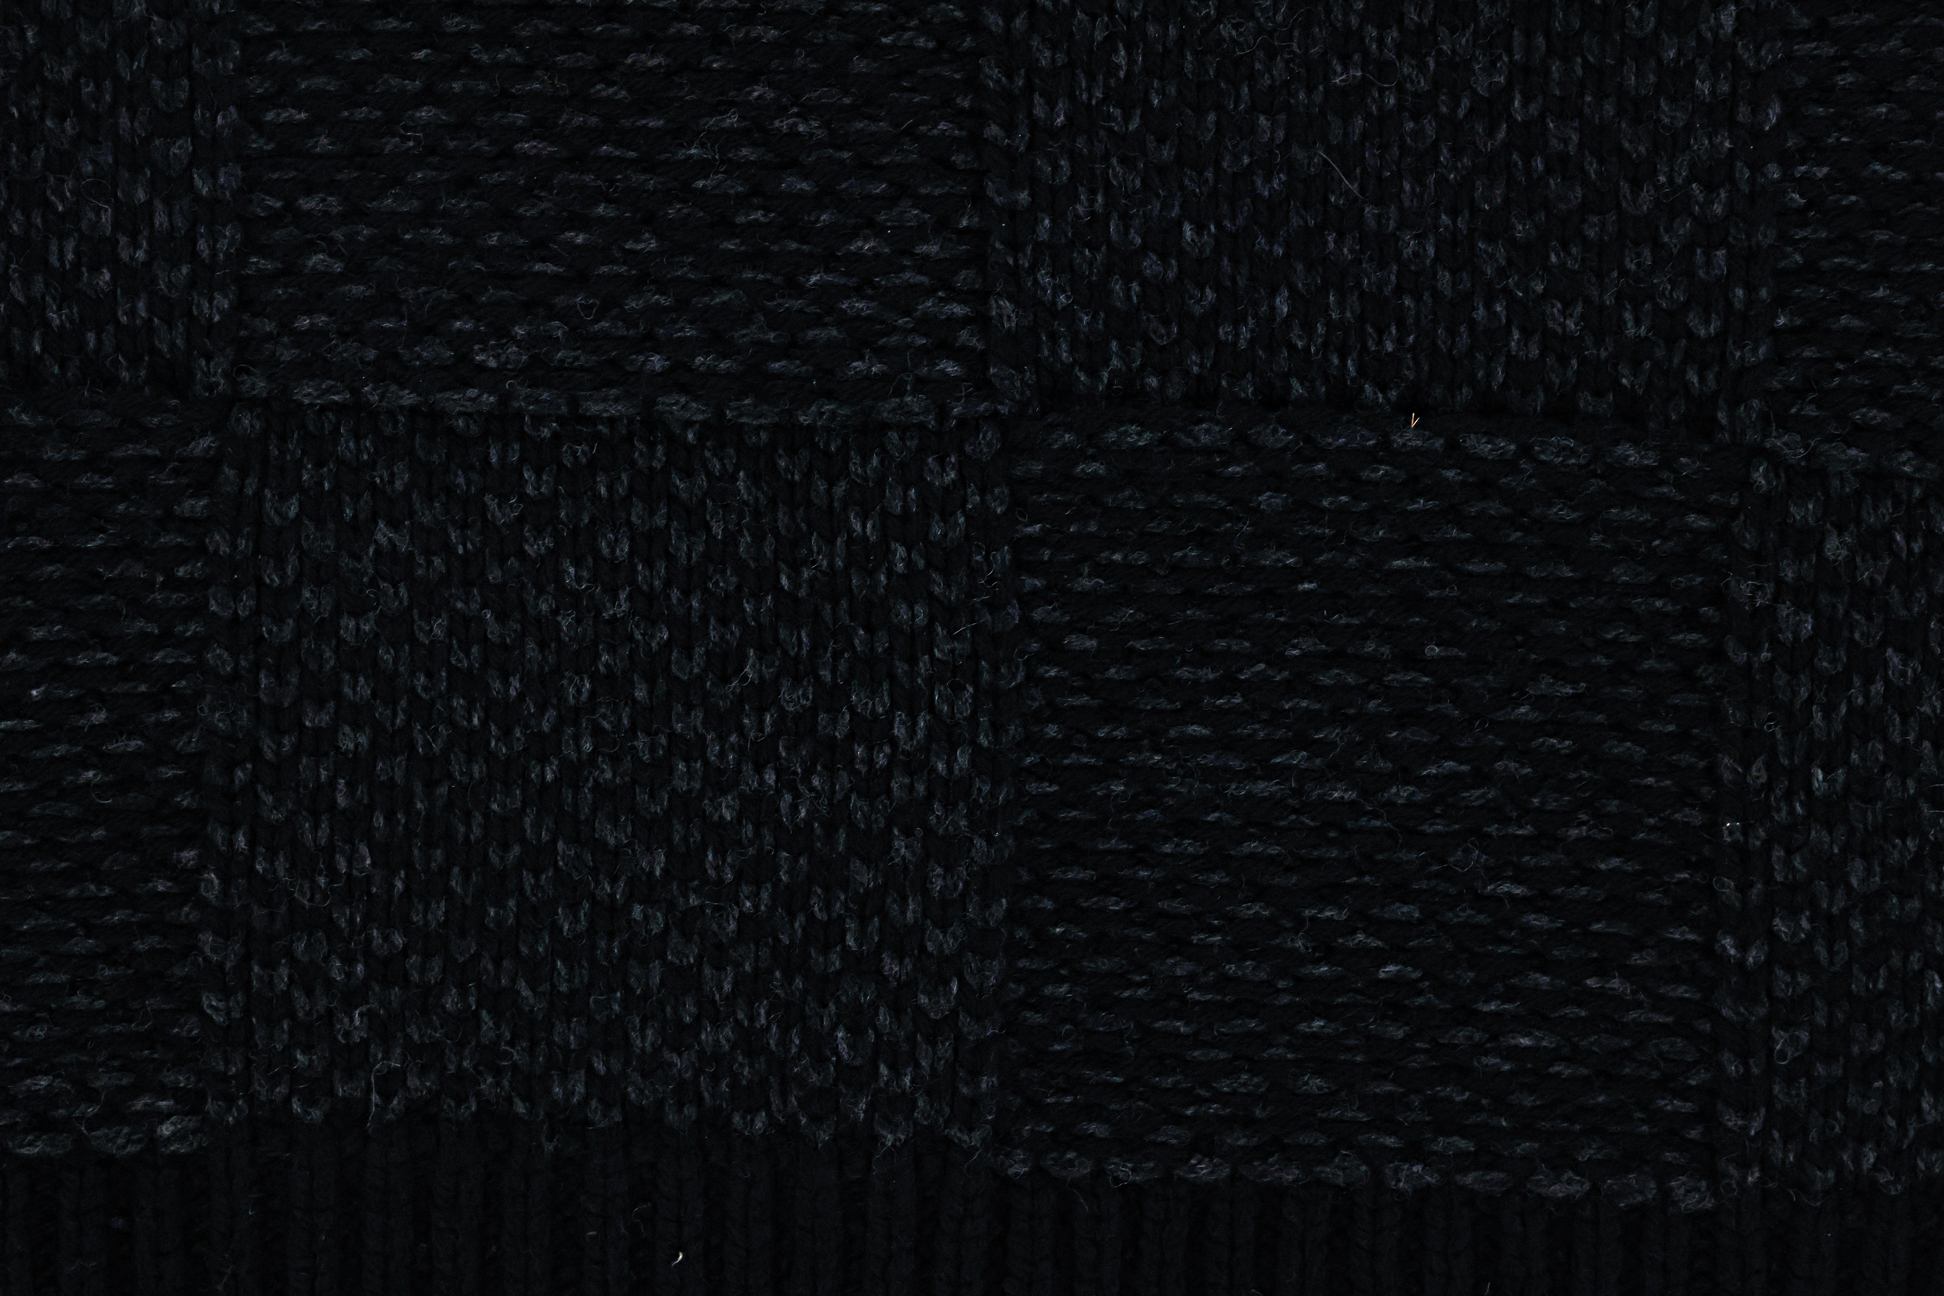 A LOUIS VUITTON DAMIER BLACK WOOL MUFFLER - Image 2 of 2